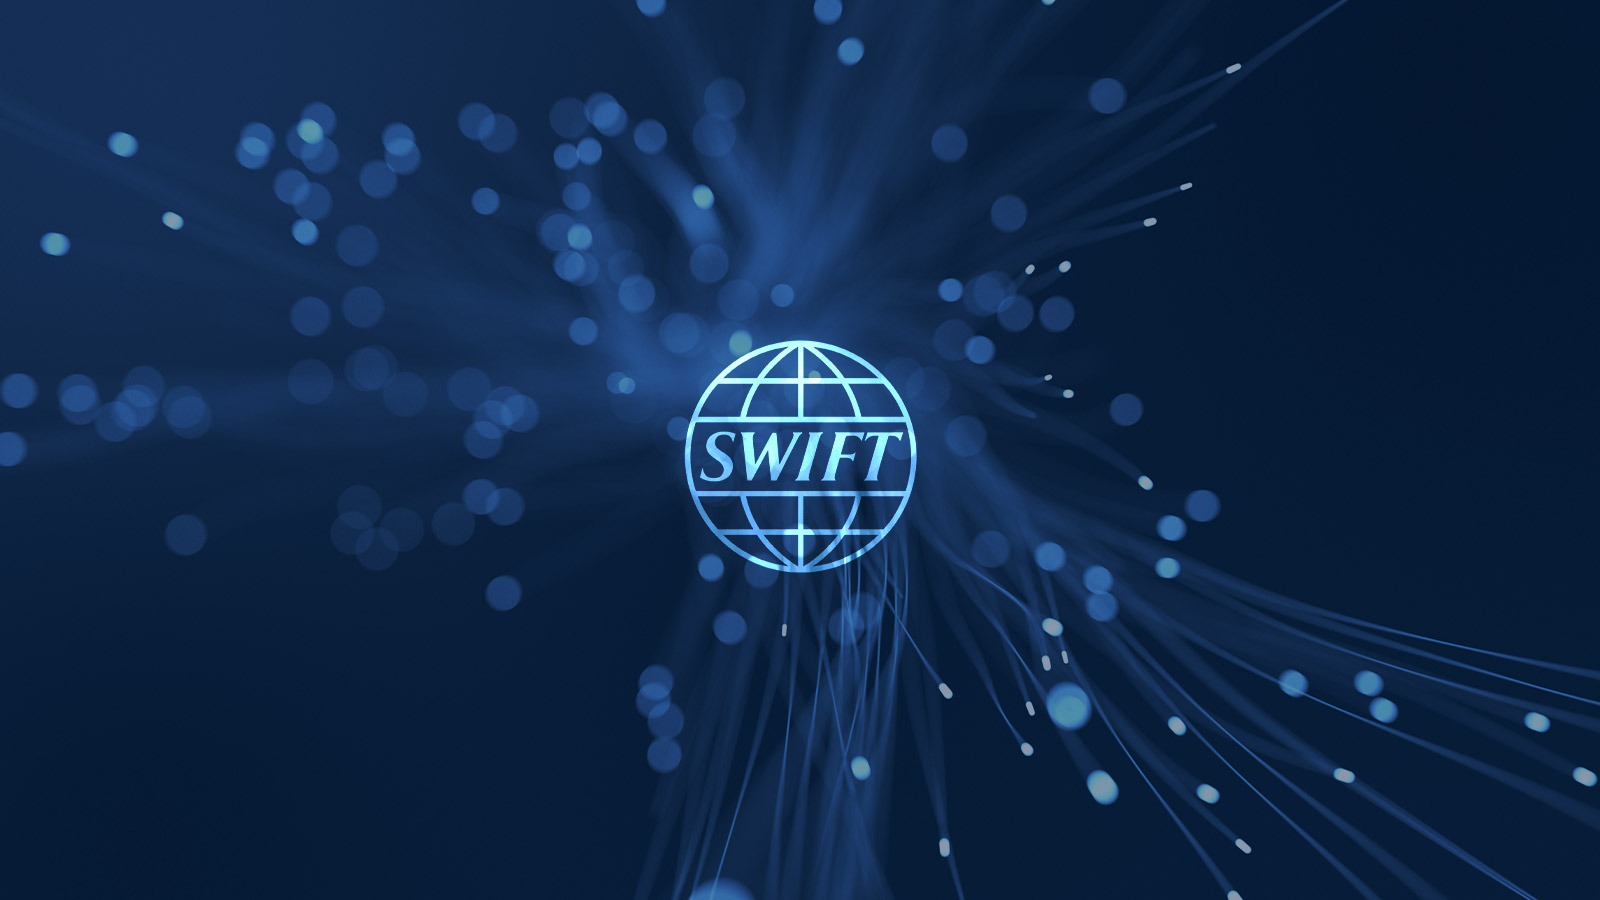 Release 7.2 – SWIFTNet Link and FileAct Enhancements